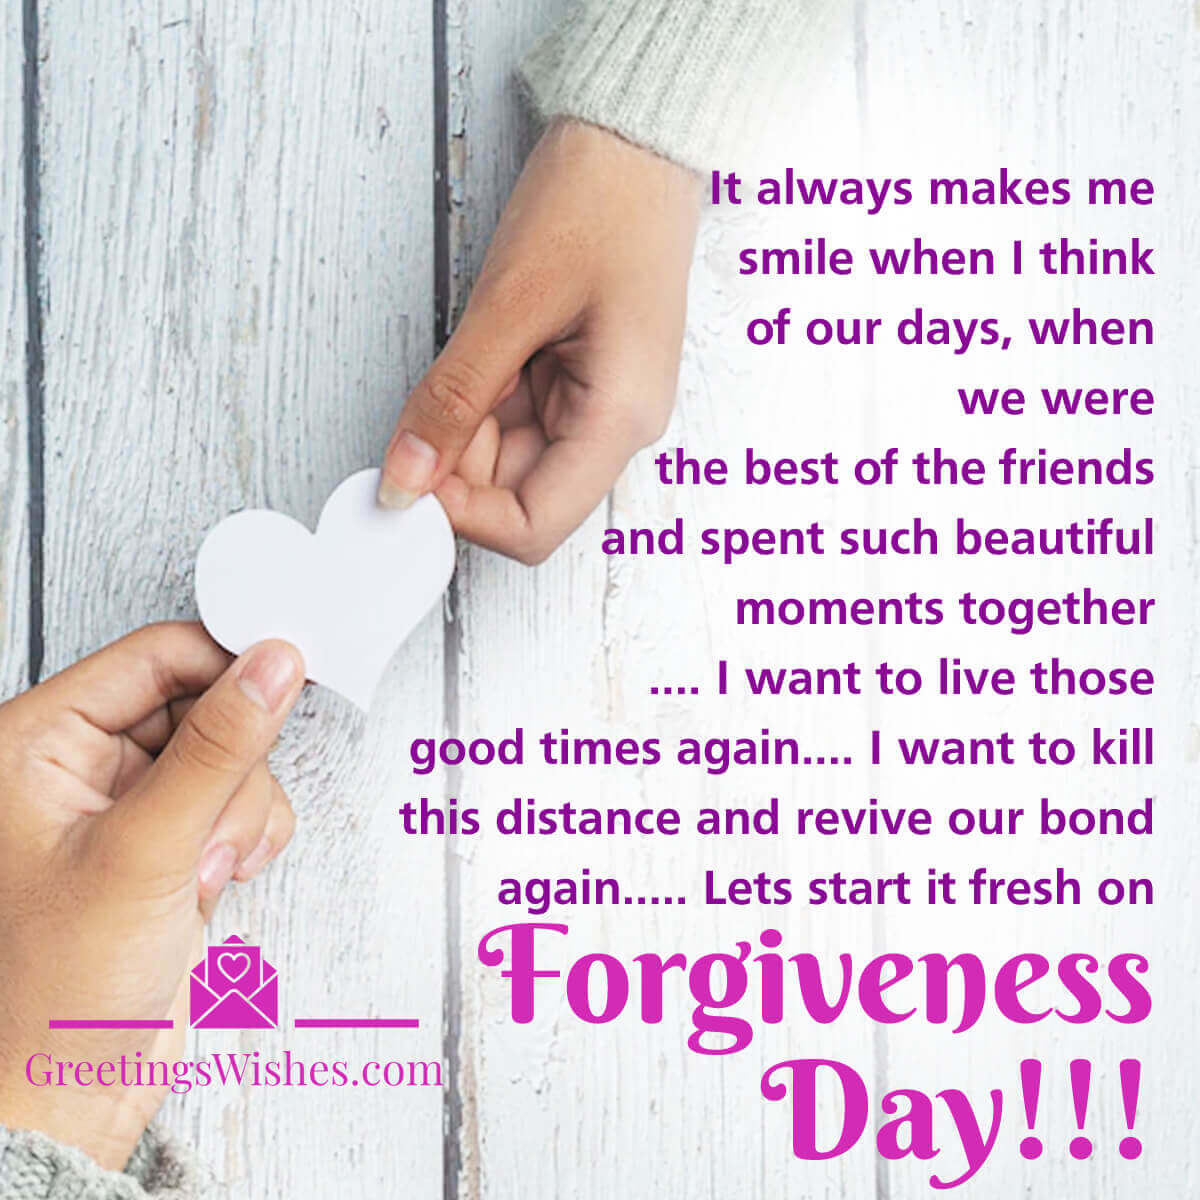 Global Forgiveness Day